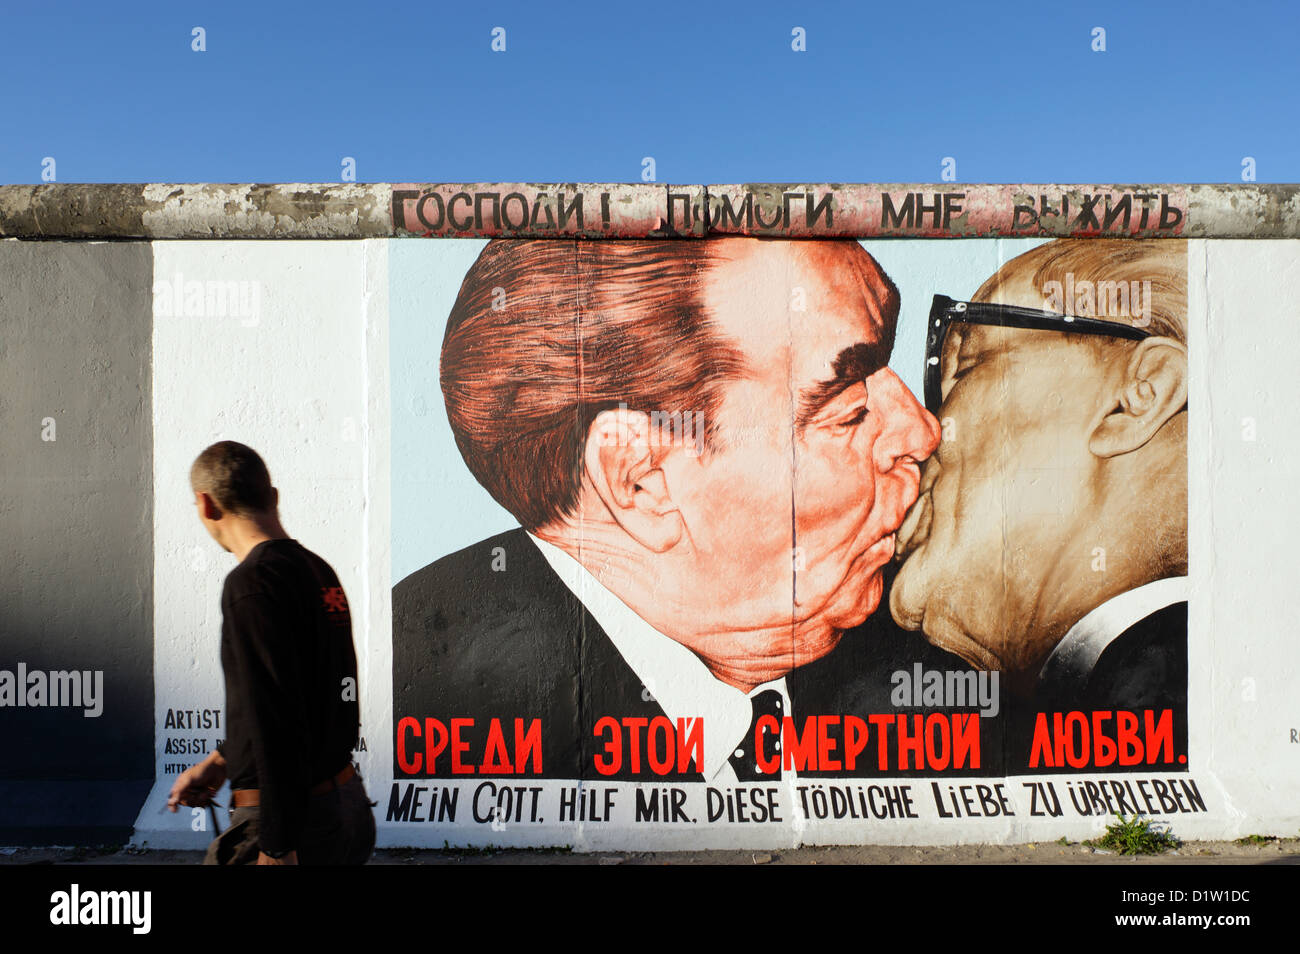 Berlin, Germany, the BRUDER kiss between Brezhnev and Honecker by Dmitry  Vrubel Stock Photo - Alamy